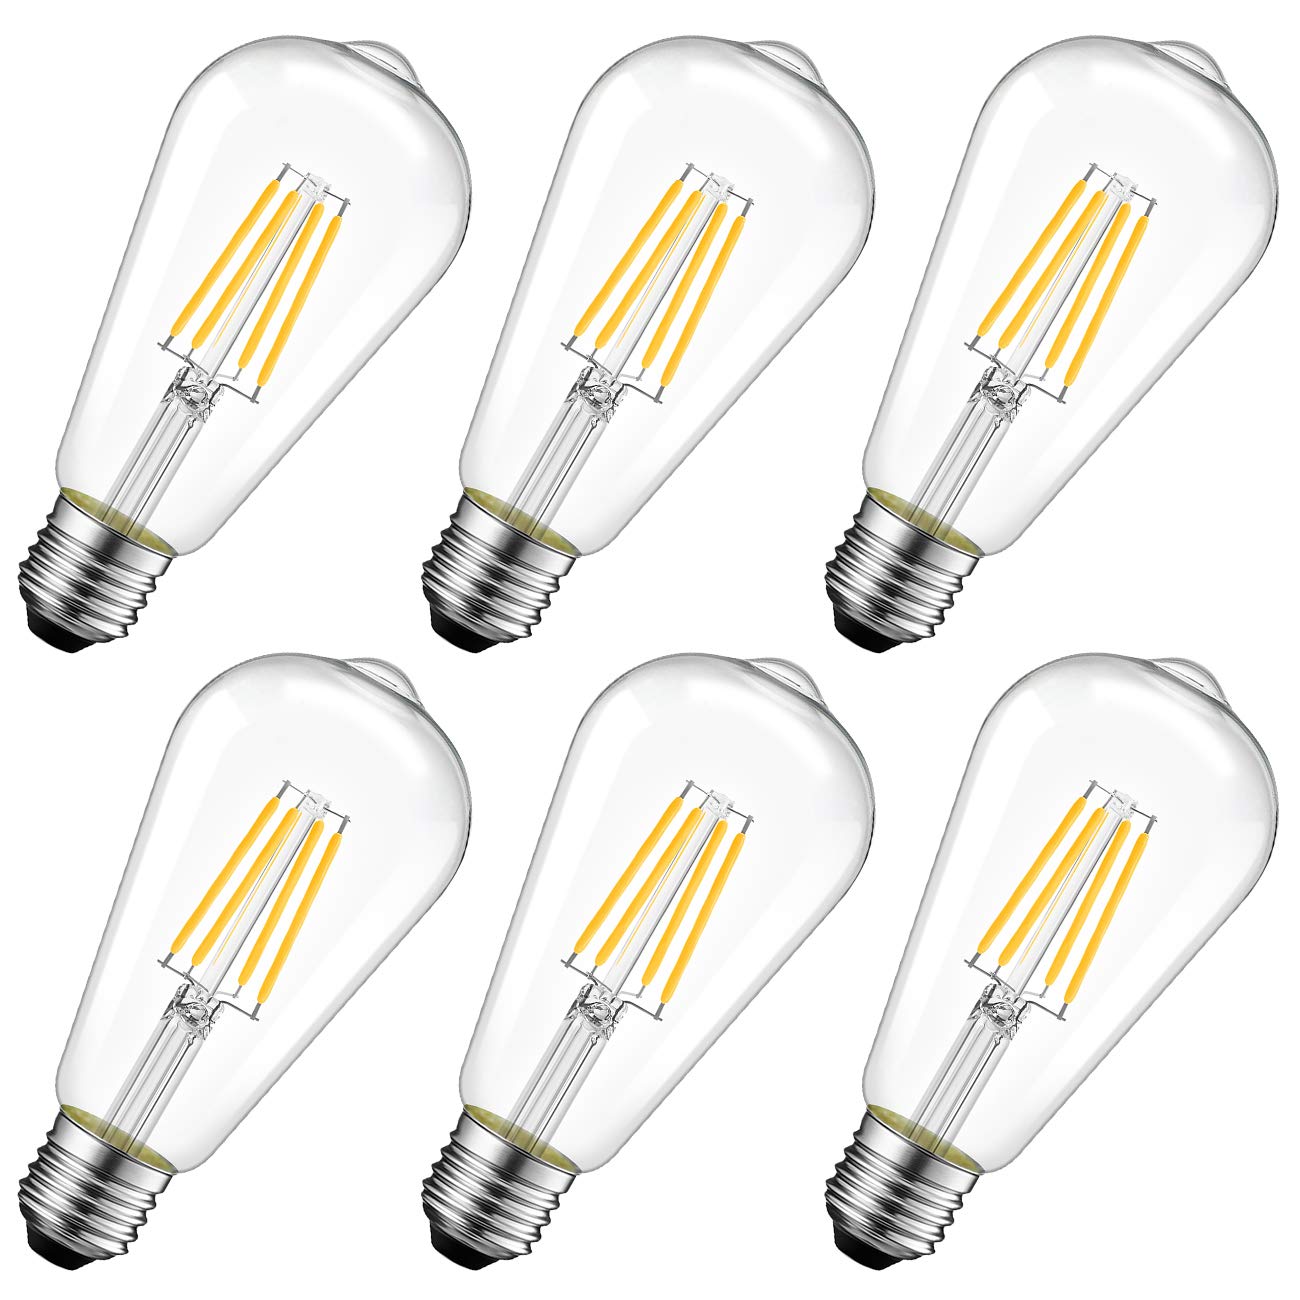 LVWIT 6.5W E27 Filament LED Glühfaden ST64, 2700K Warmweiß, Ersatz für 60W Glühlampe, ultrahell 806 lm, Rustikalampe in Kolbenform, Filamentstil klar (6er Pack)